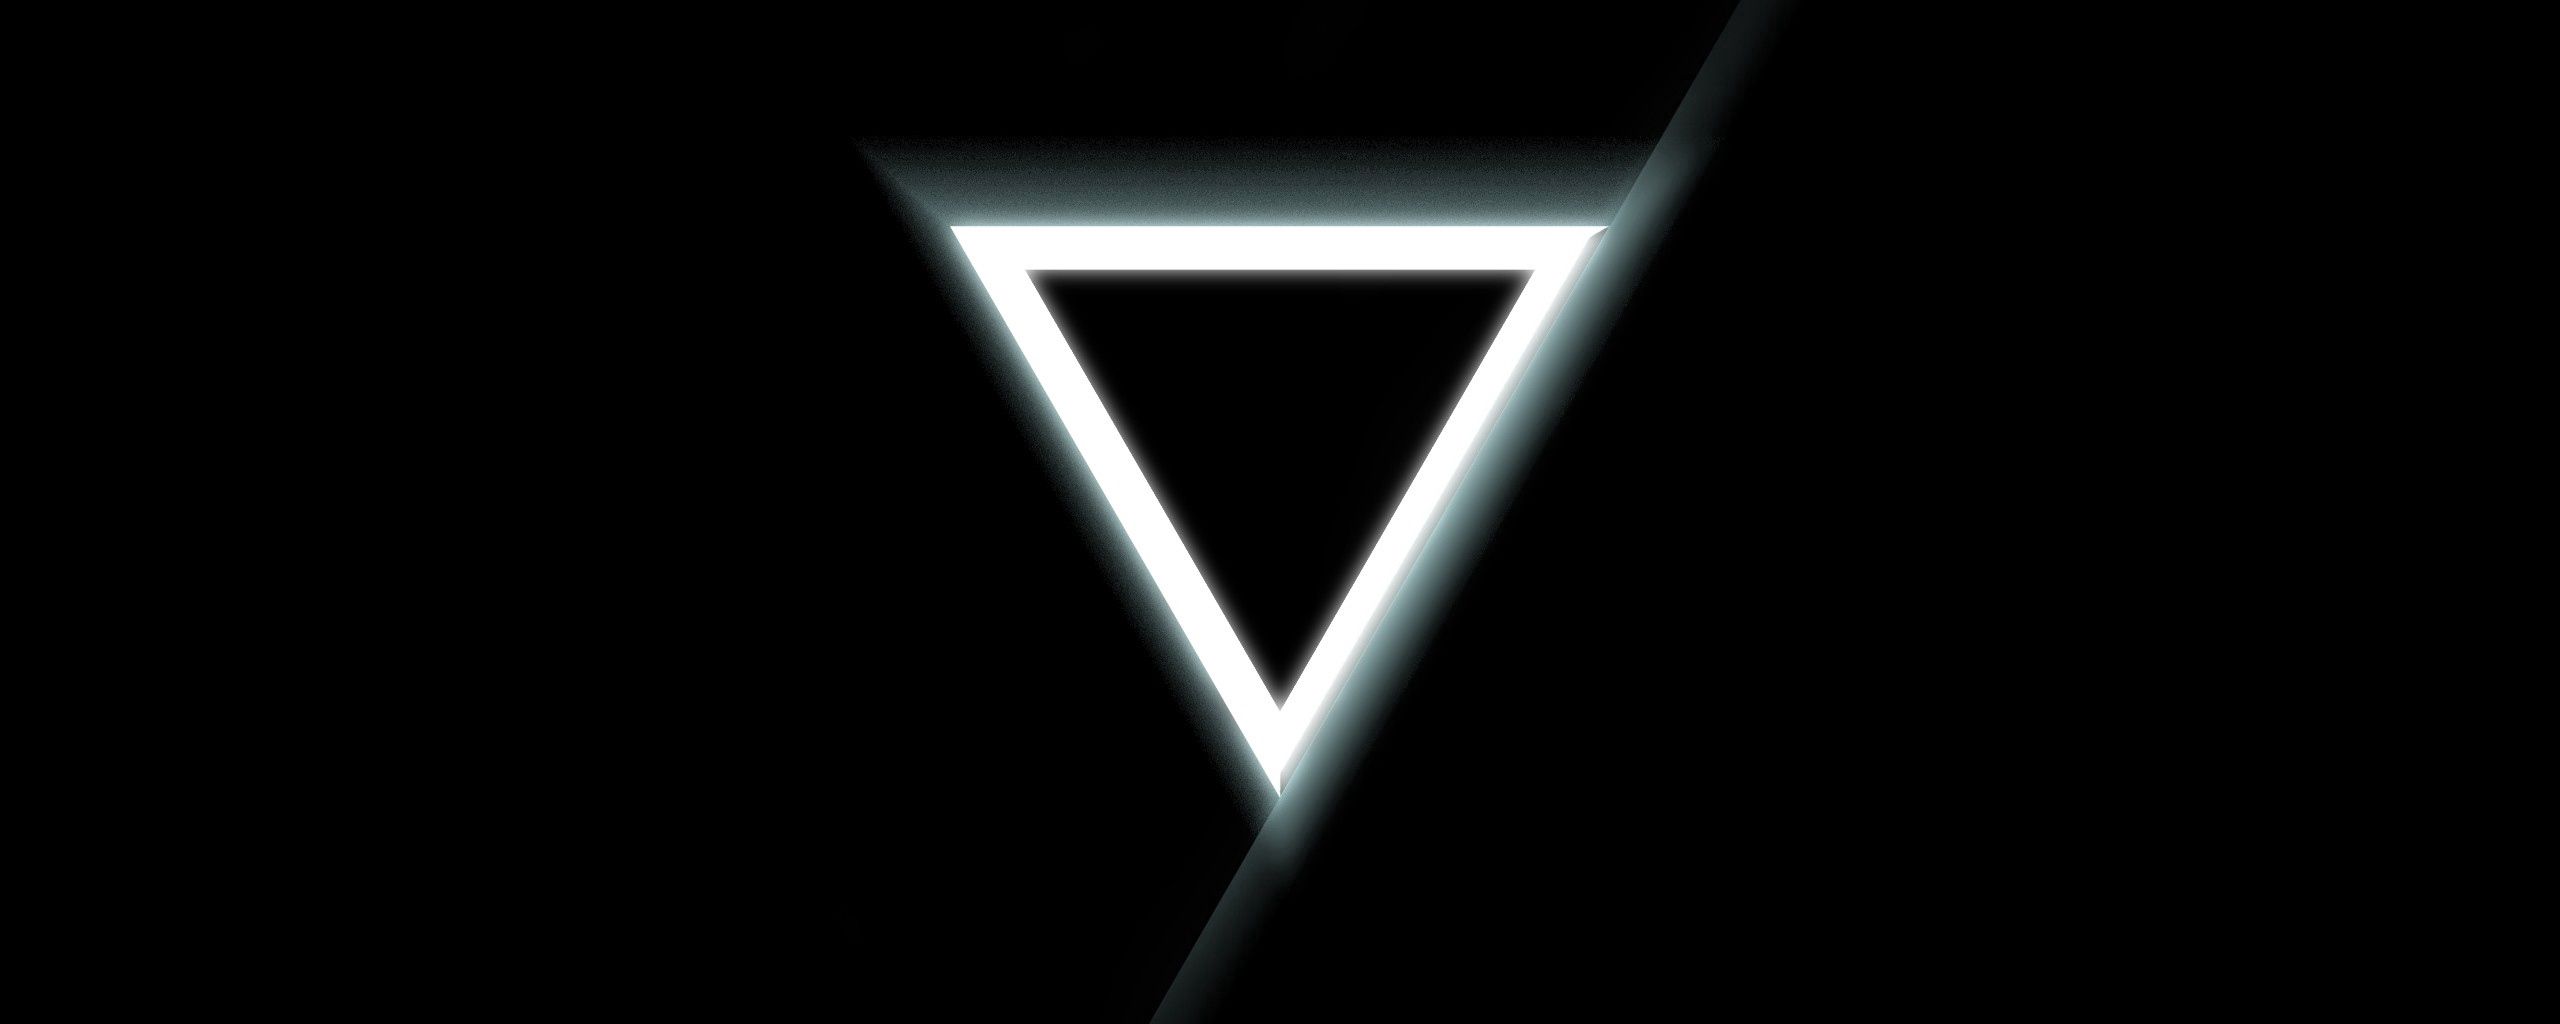 2560x1024 Wallpaper triangle, inverted, black, white